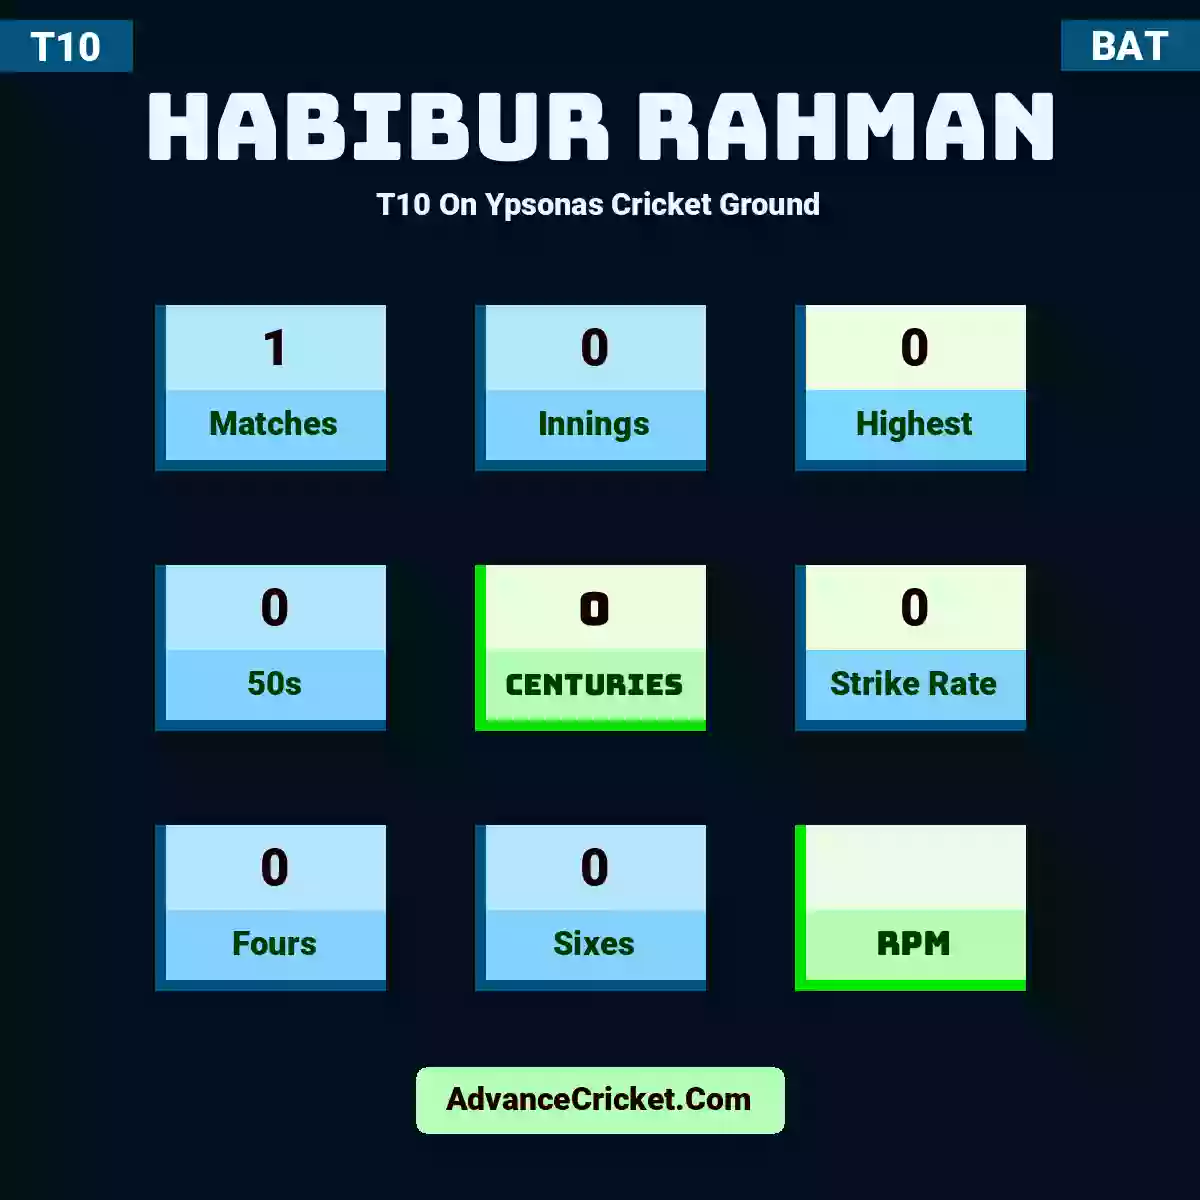 Habibur Rahman T10  On Ypsonas Cricket Ground, Habibur Rahman played 1 matches, scored 0 runs as highest, 0 half-centuries, and 0 centuries, with a strike rate of 0. H.Rahman hit 0 fours and 0 sixes.